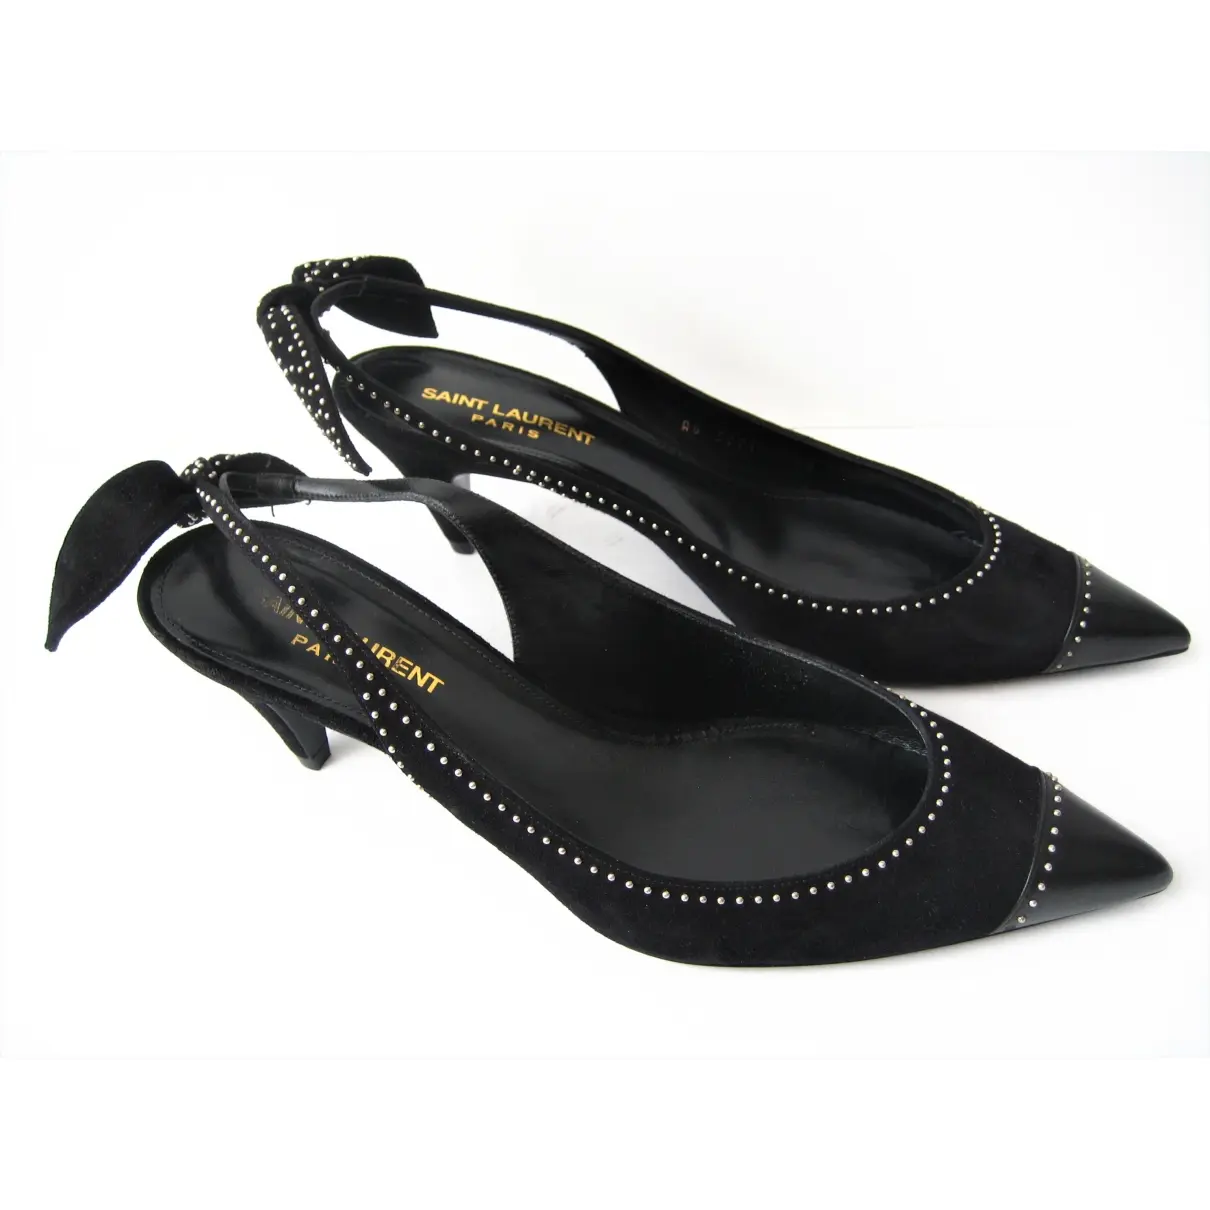 Saint Laurent Charlotte heels for sale